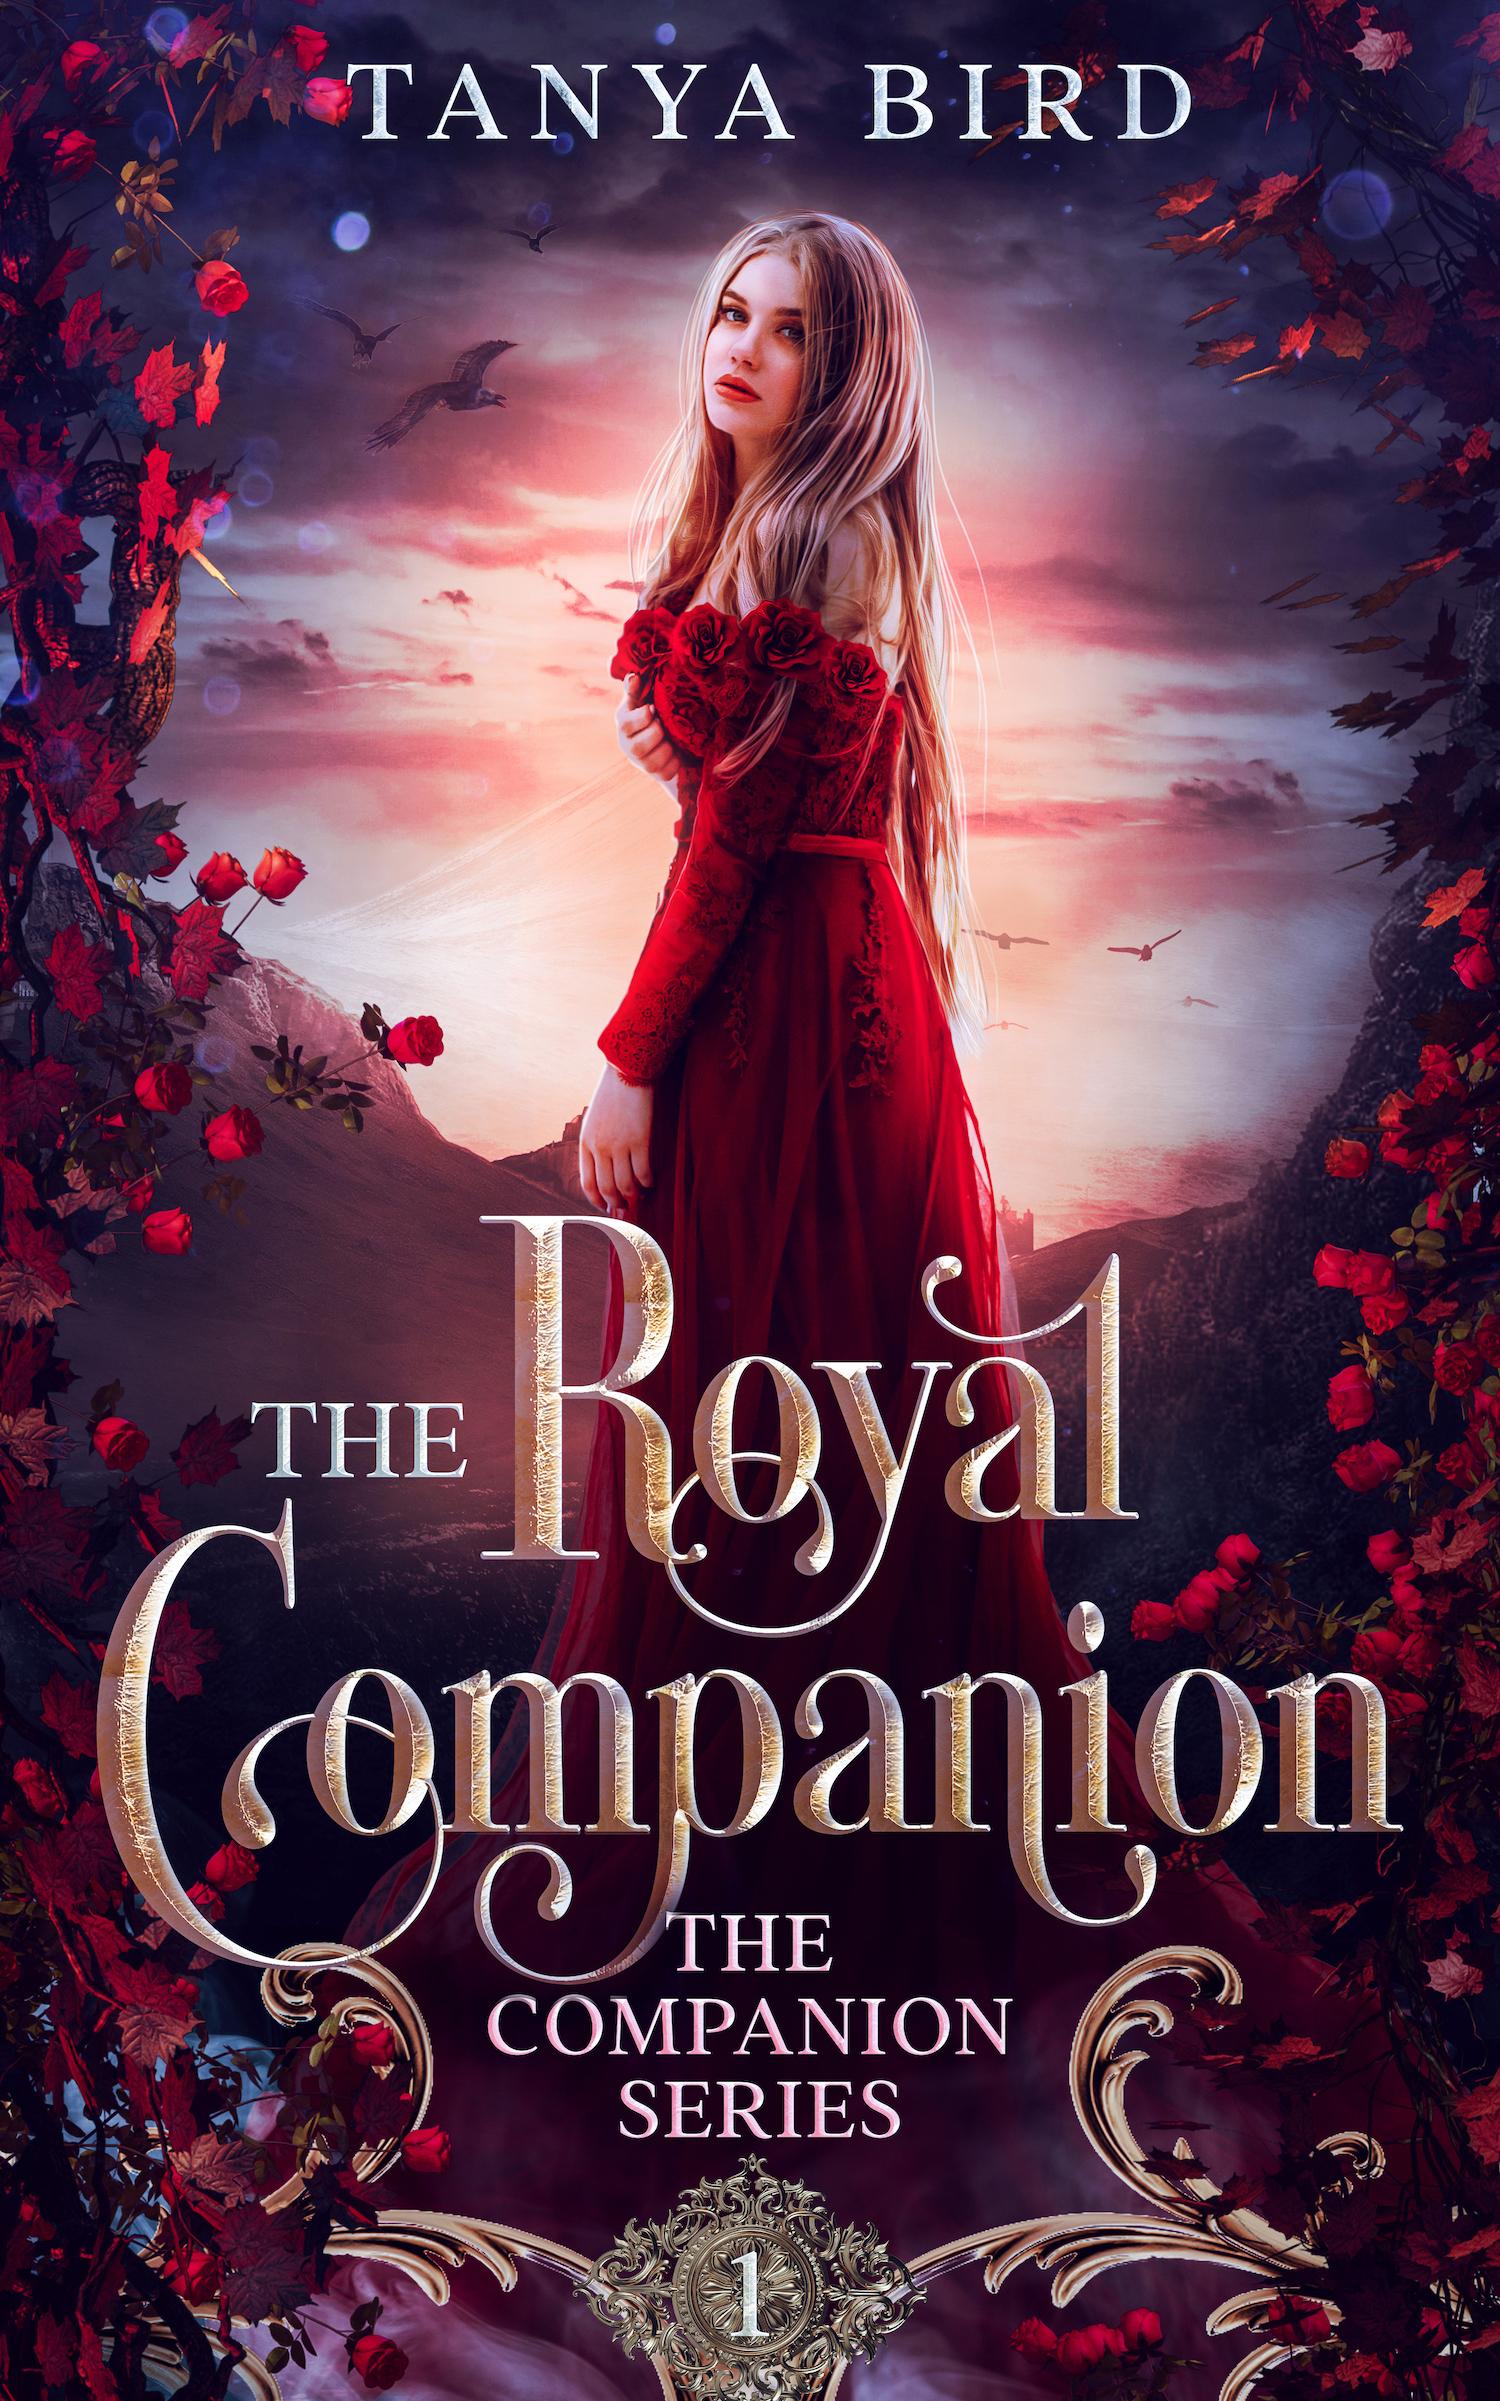 The Royal Companion